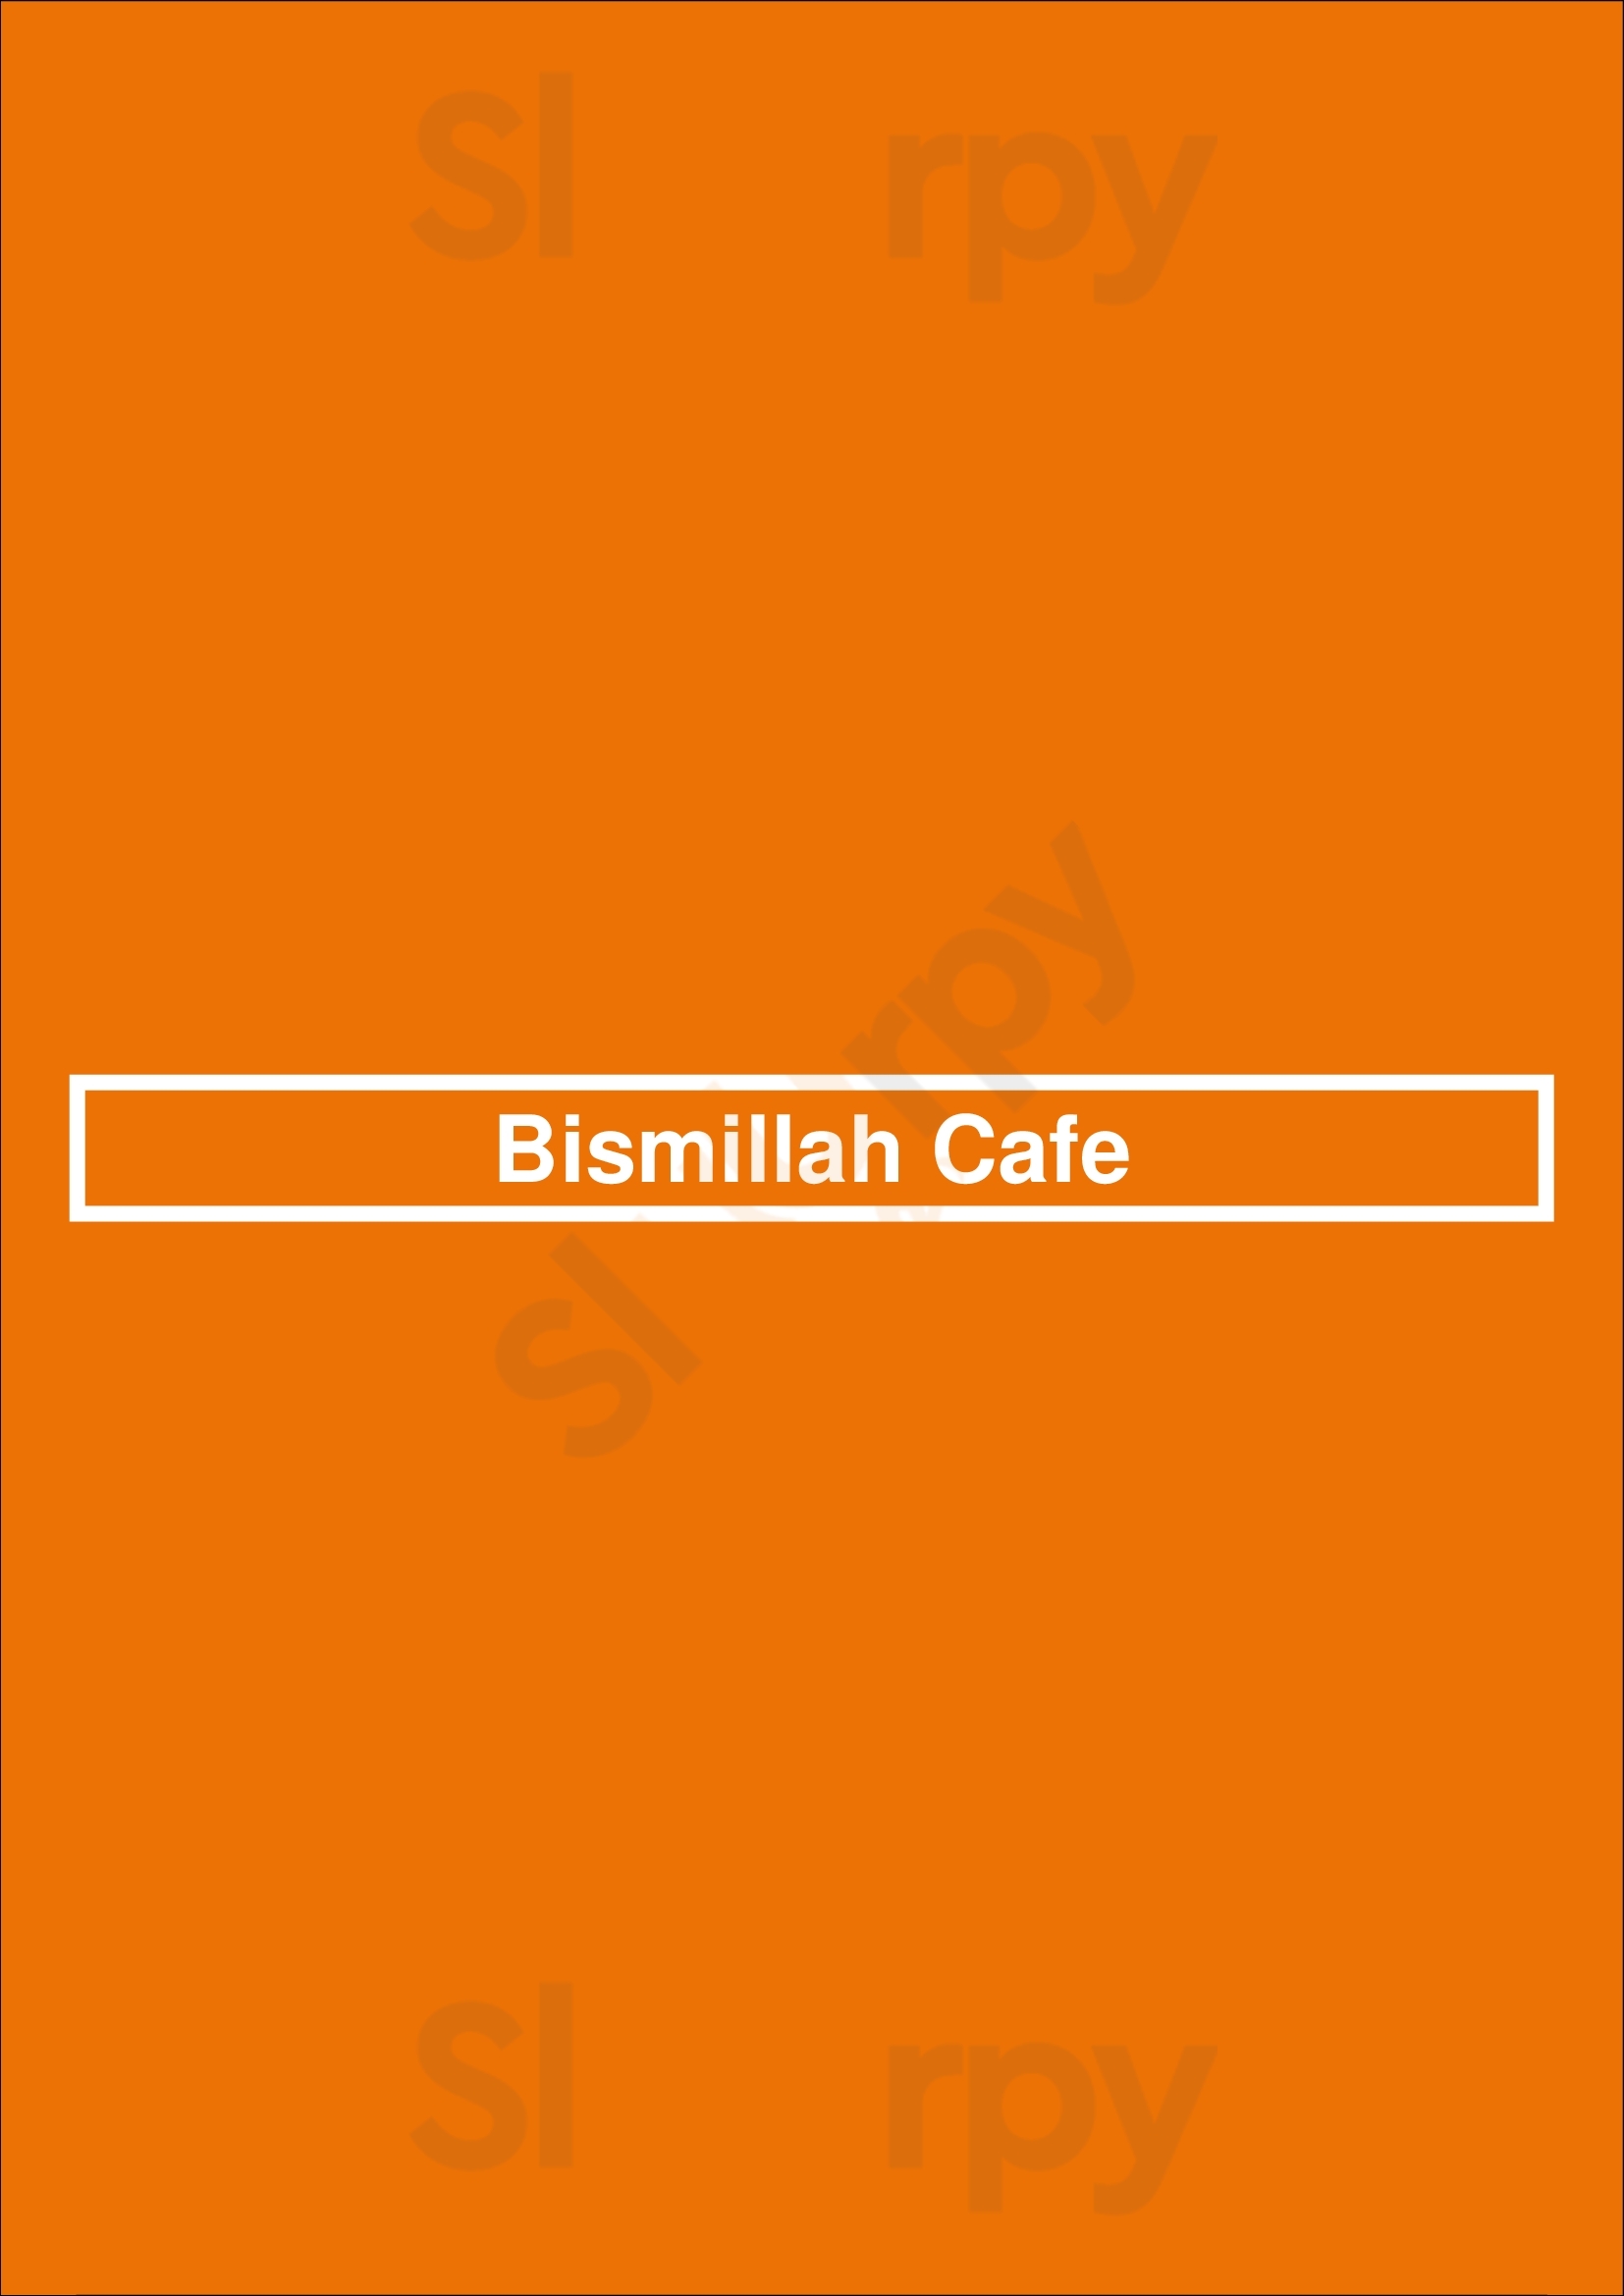 Bismillah Cafe Atlanta Menu - 1